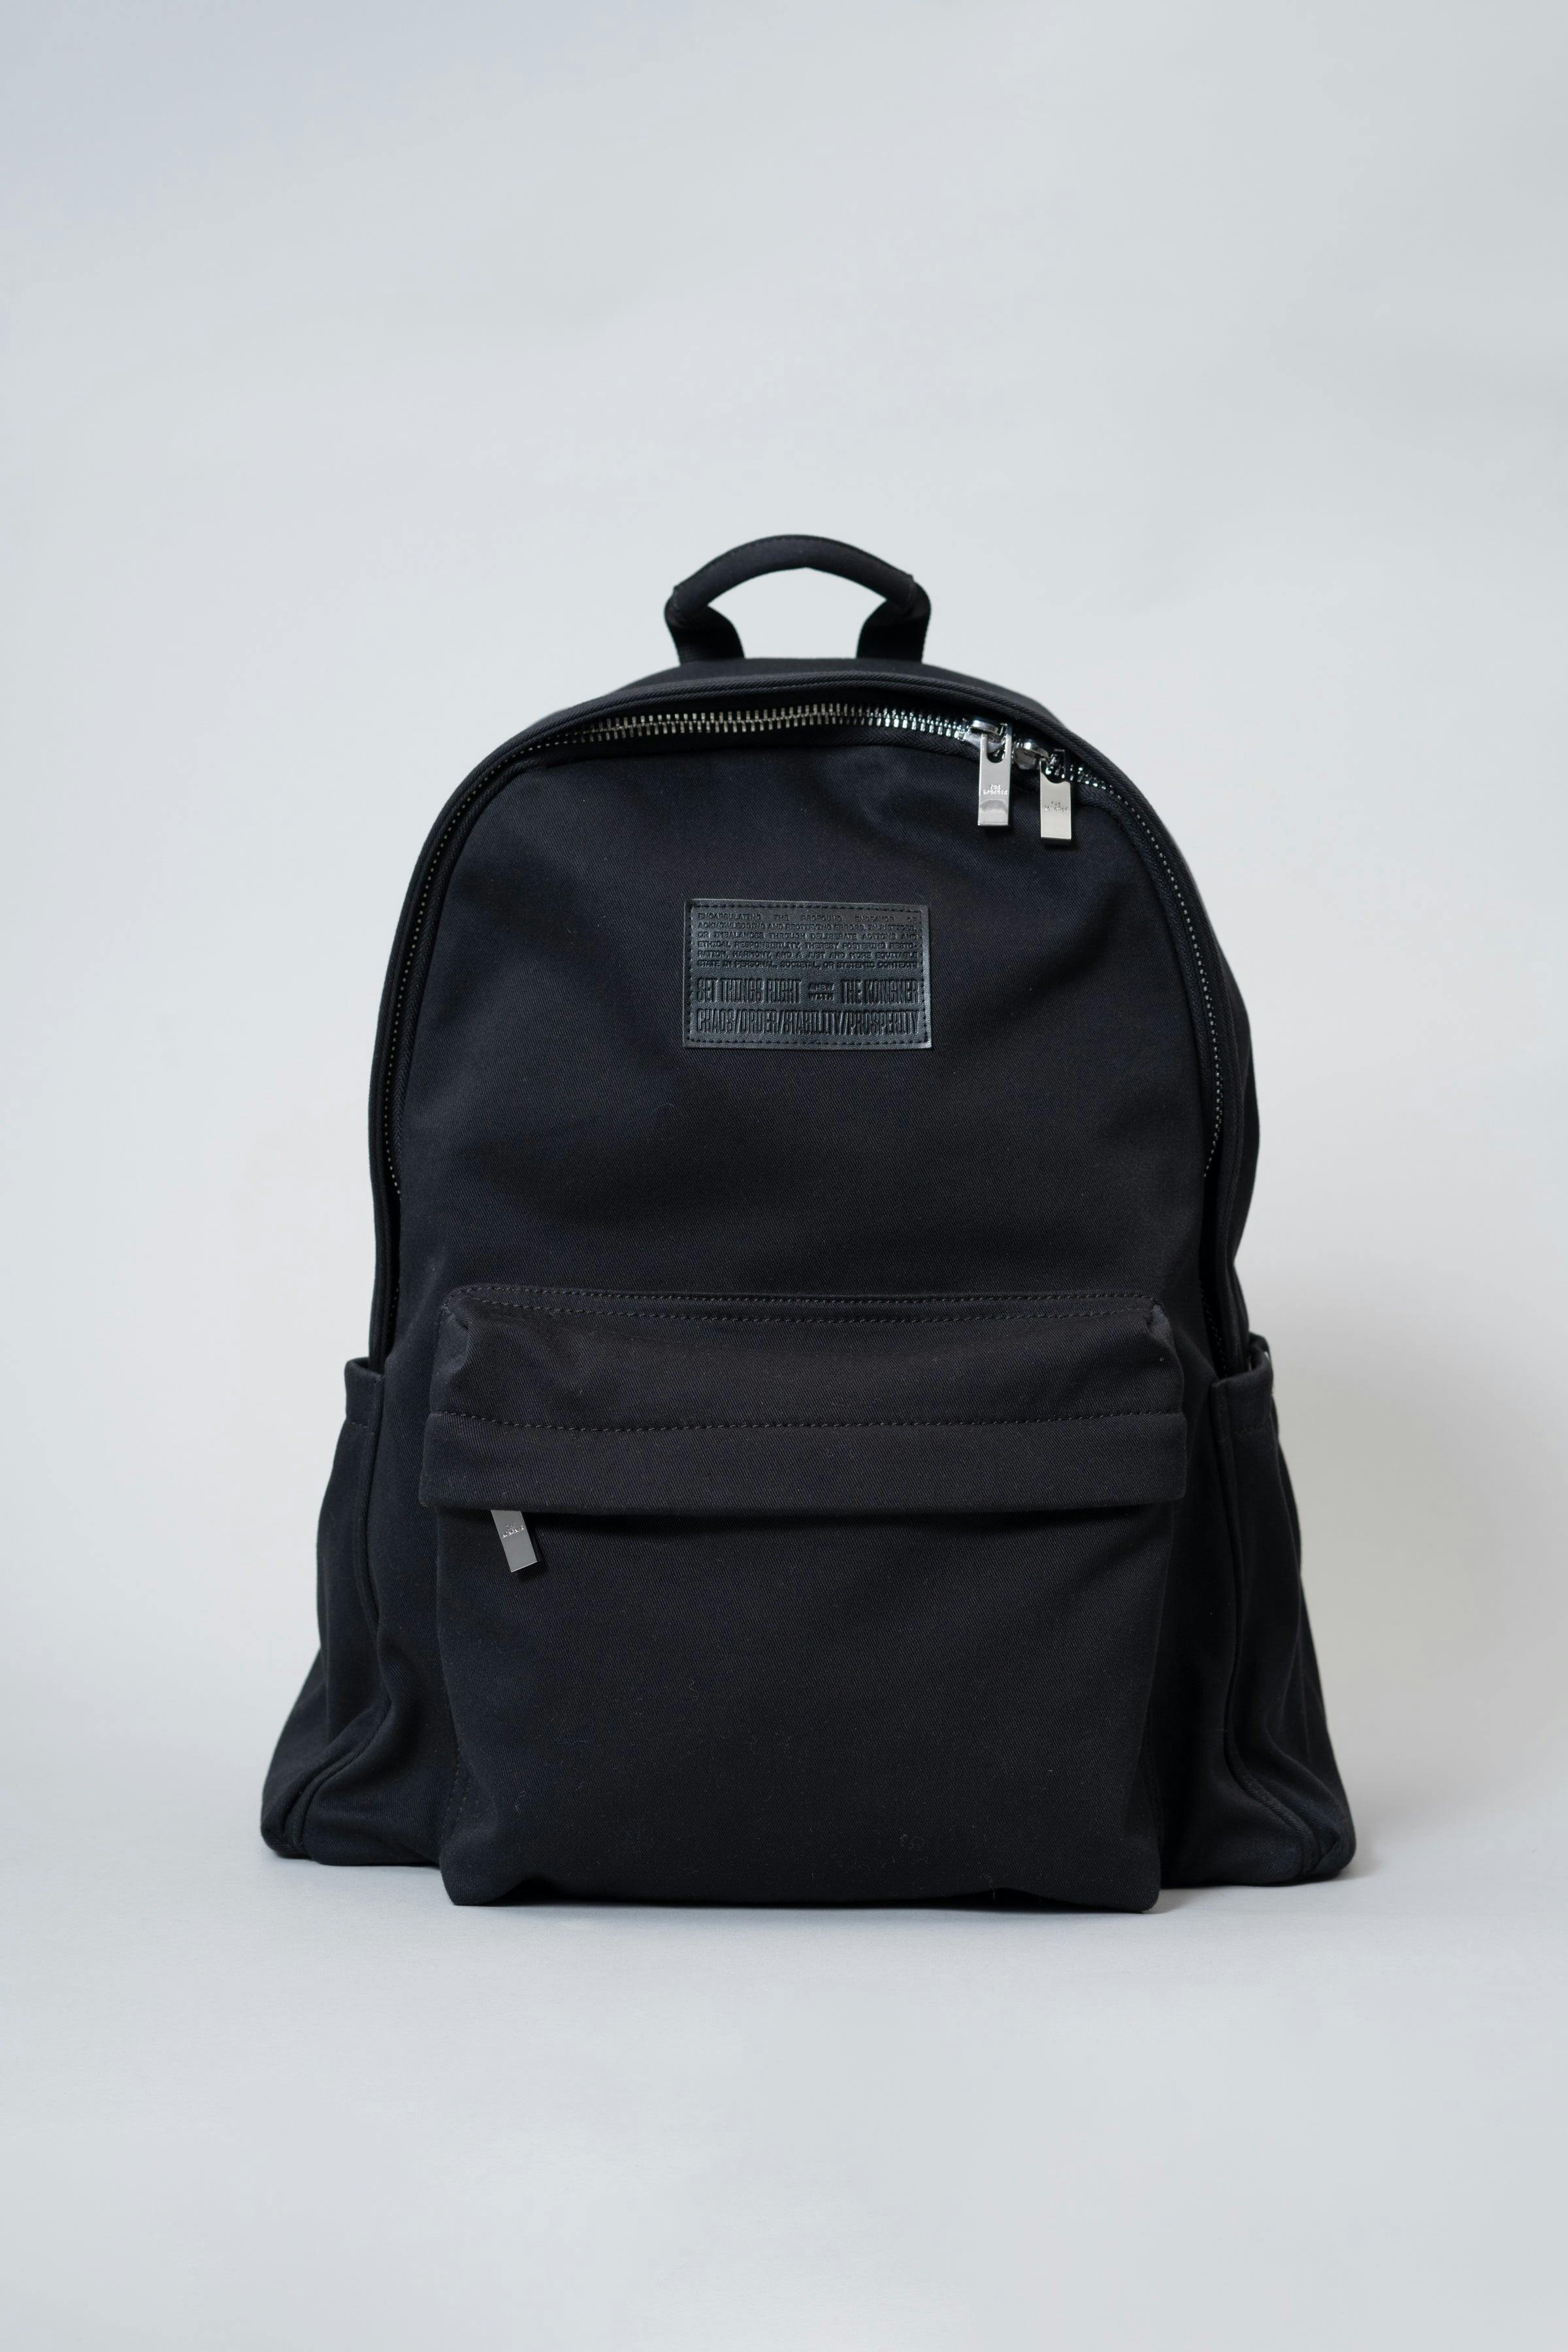 ˝STABILITY˝ Backpack - Plain Black